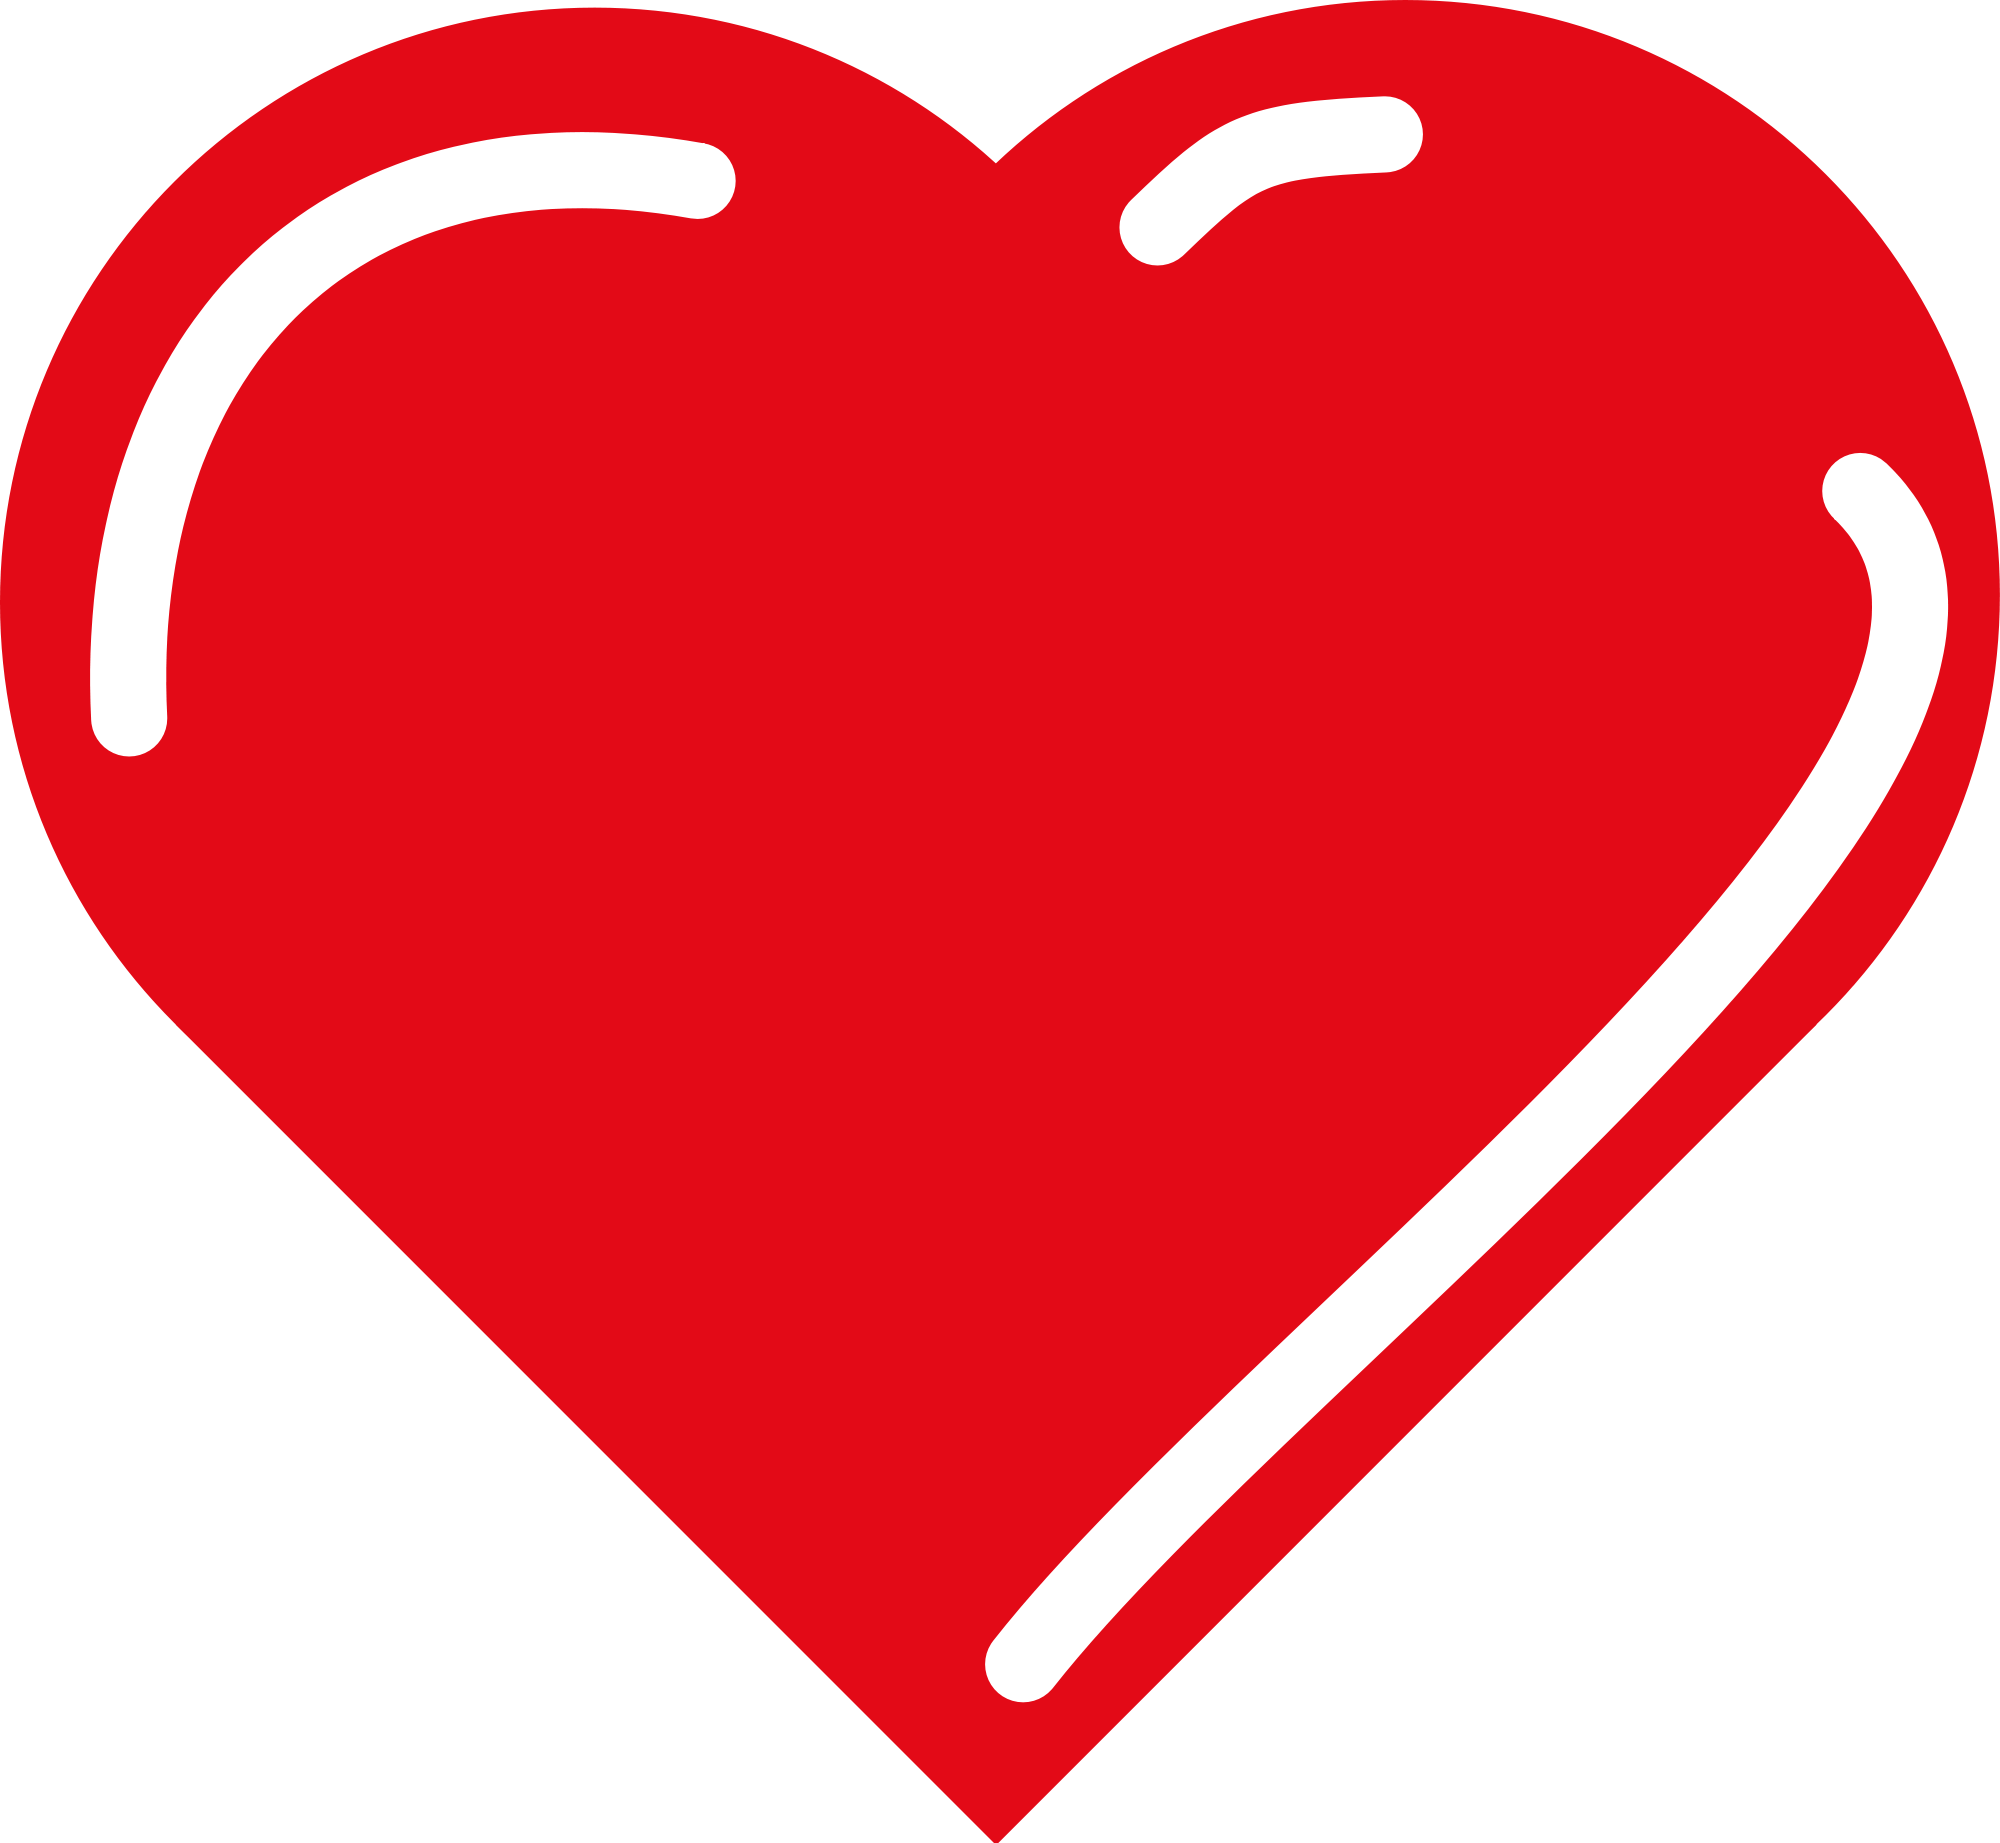 File:Love Heart symbol reflection.svg